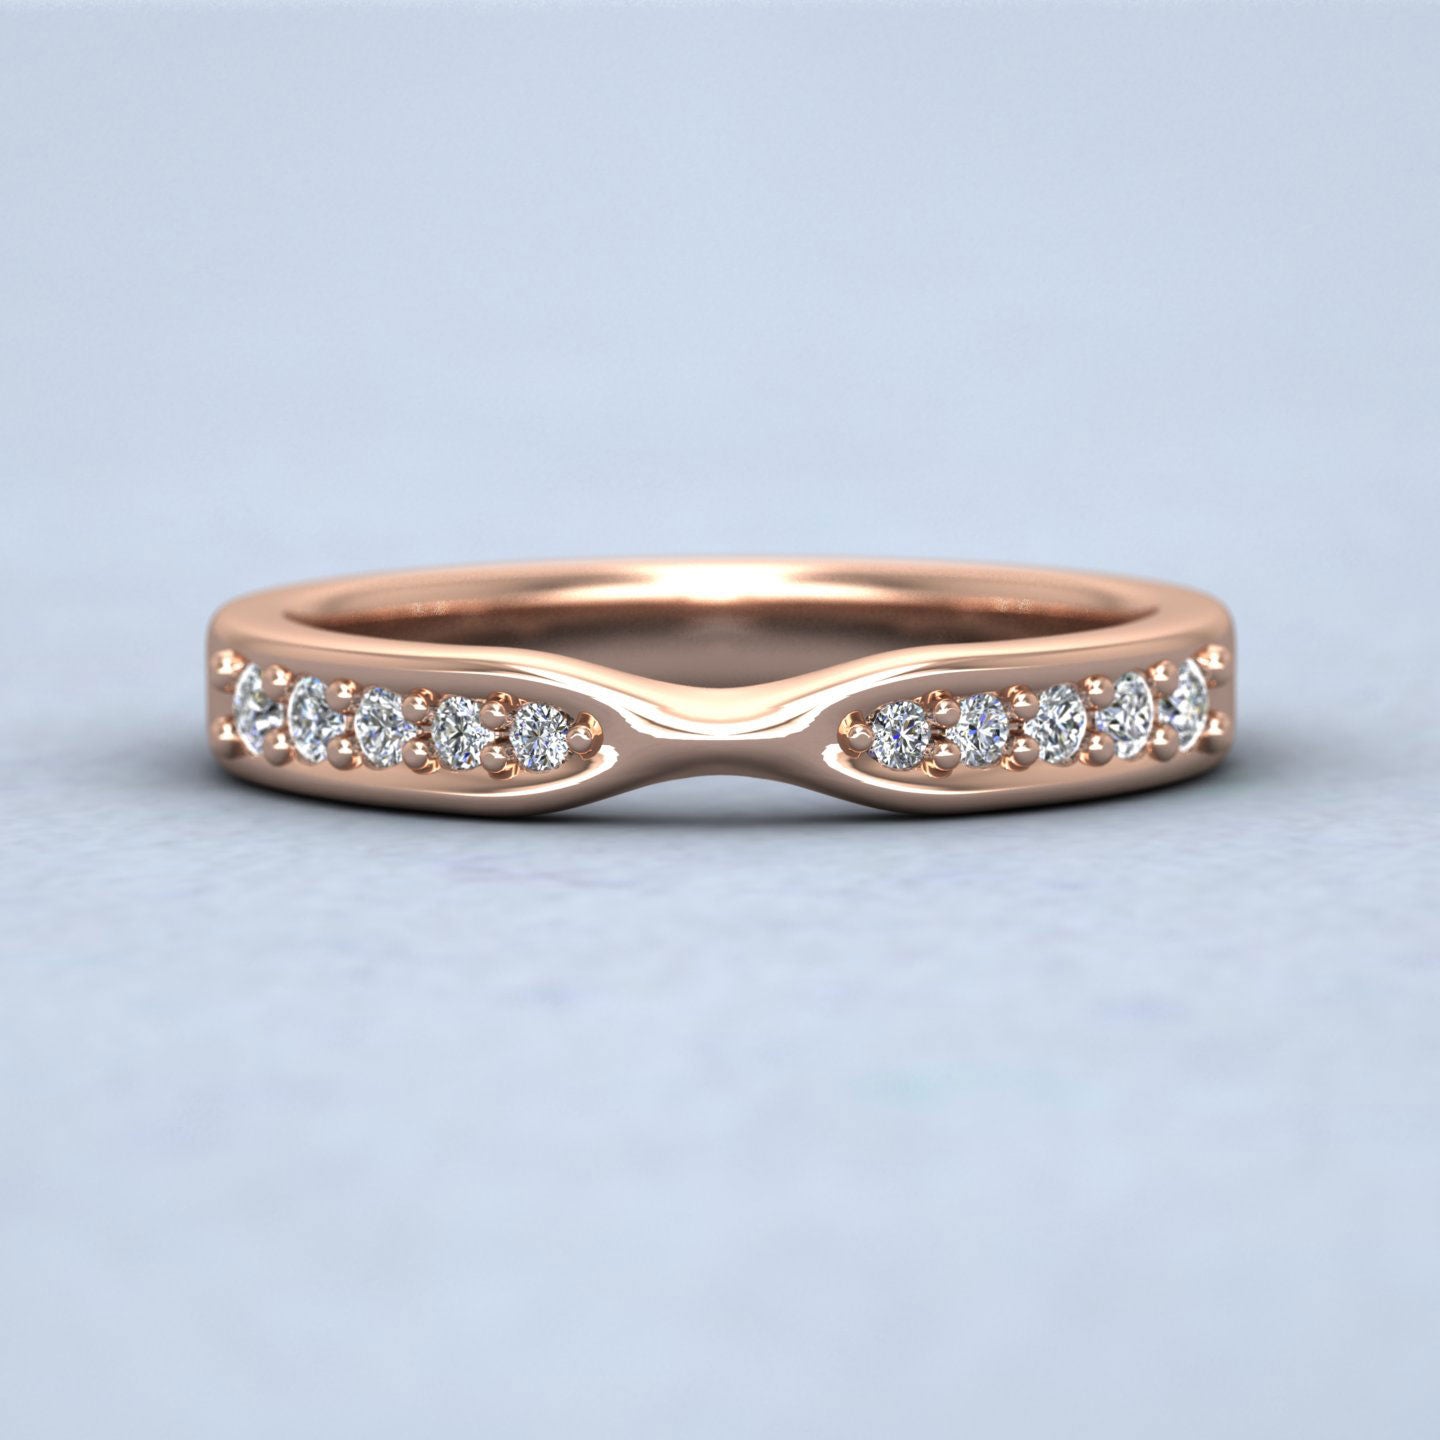 Pinch Design Wedding Ring With Diamonds 18ct Rose Gold 3mm Wedding Ring